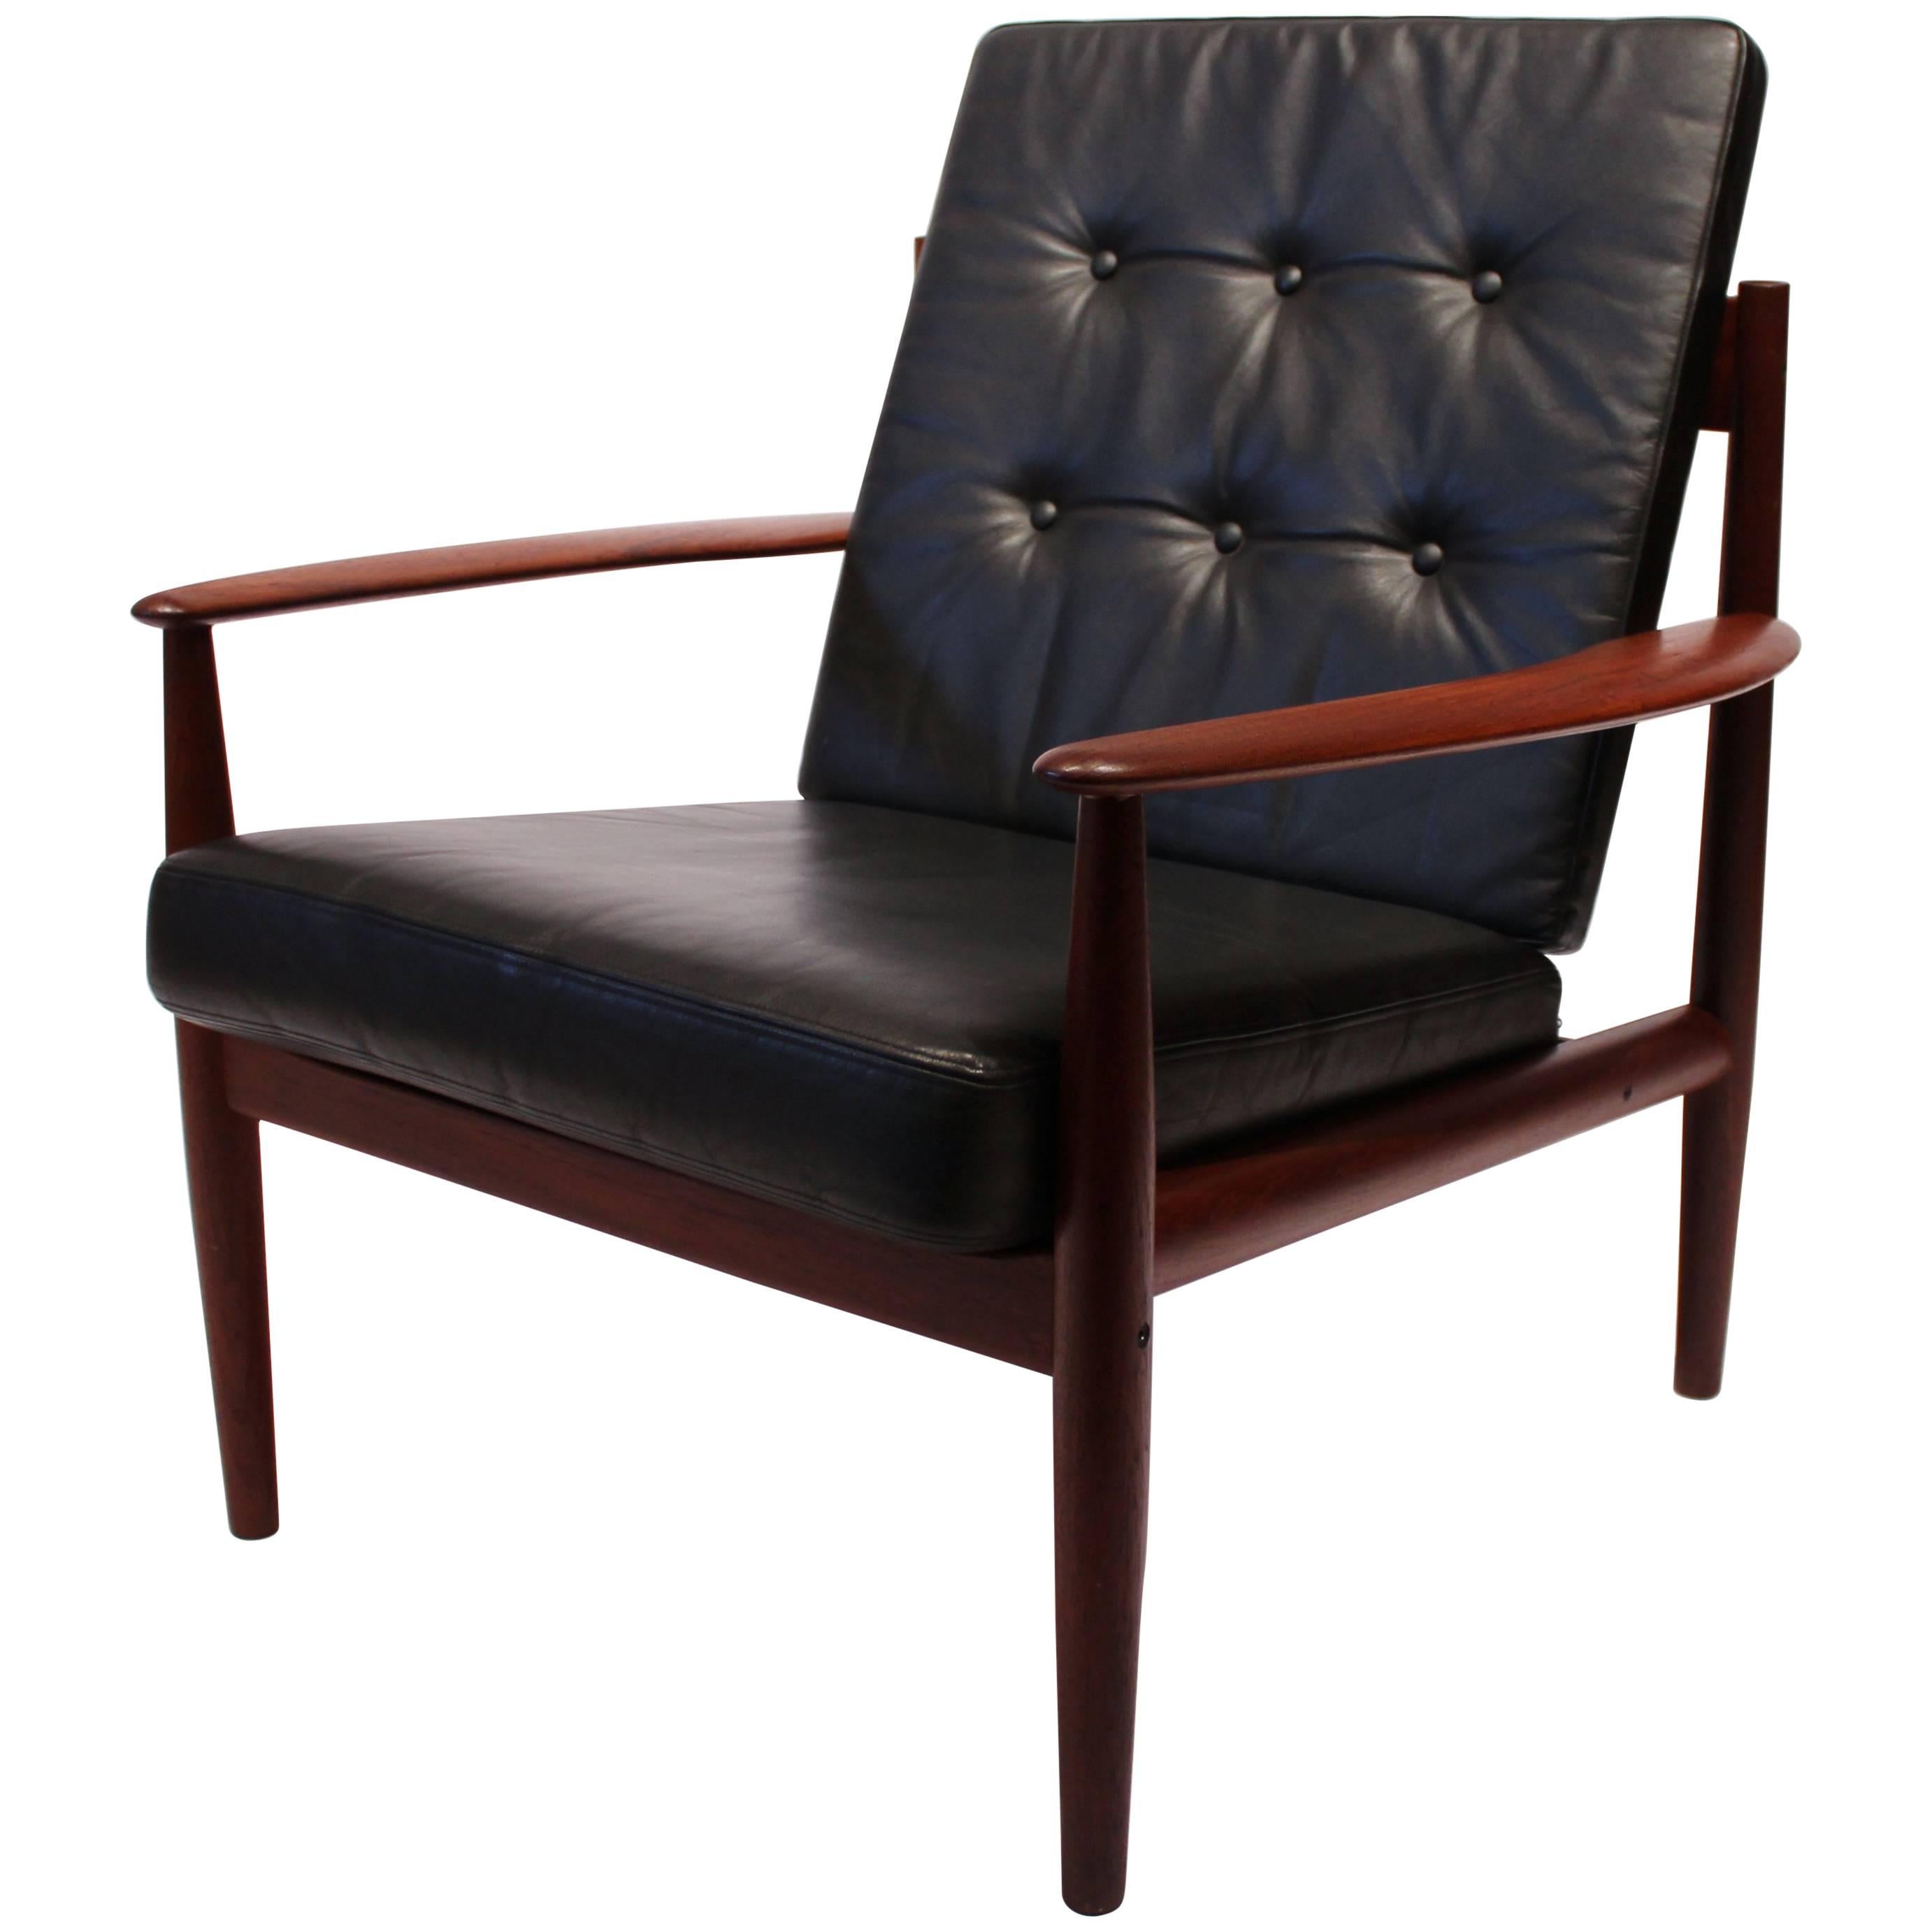 Scandinavian Modern Easy Chair, Model 118, in Teak by Grete Jalk, France and Son